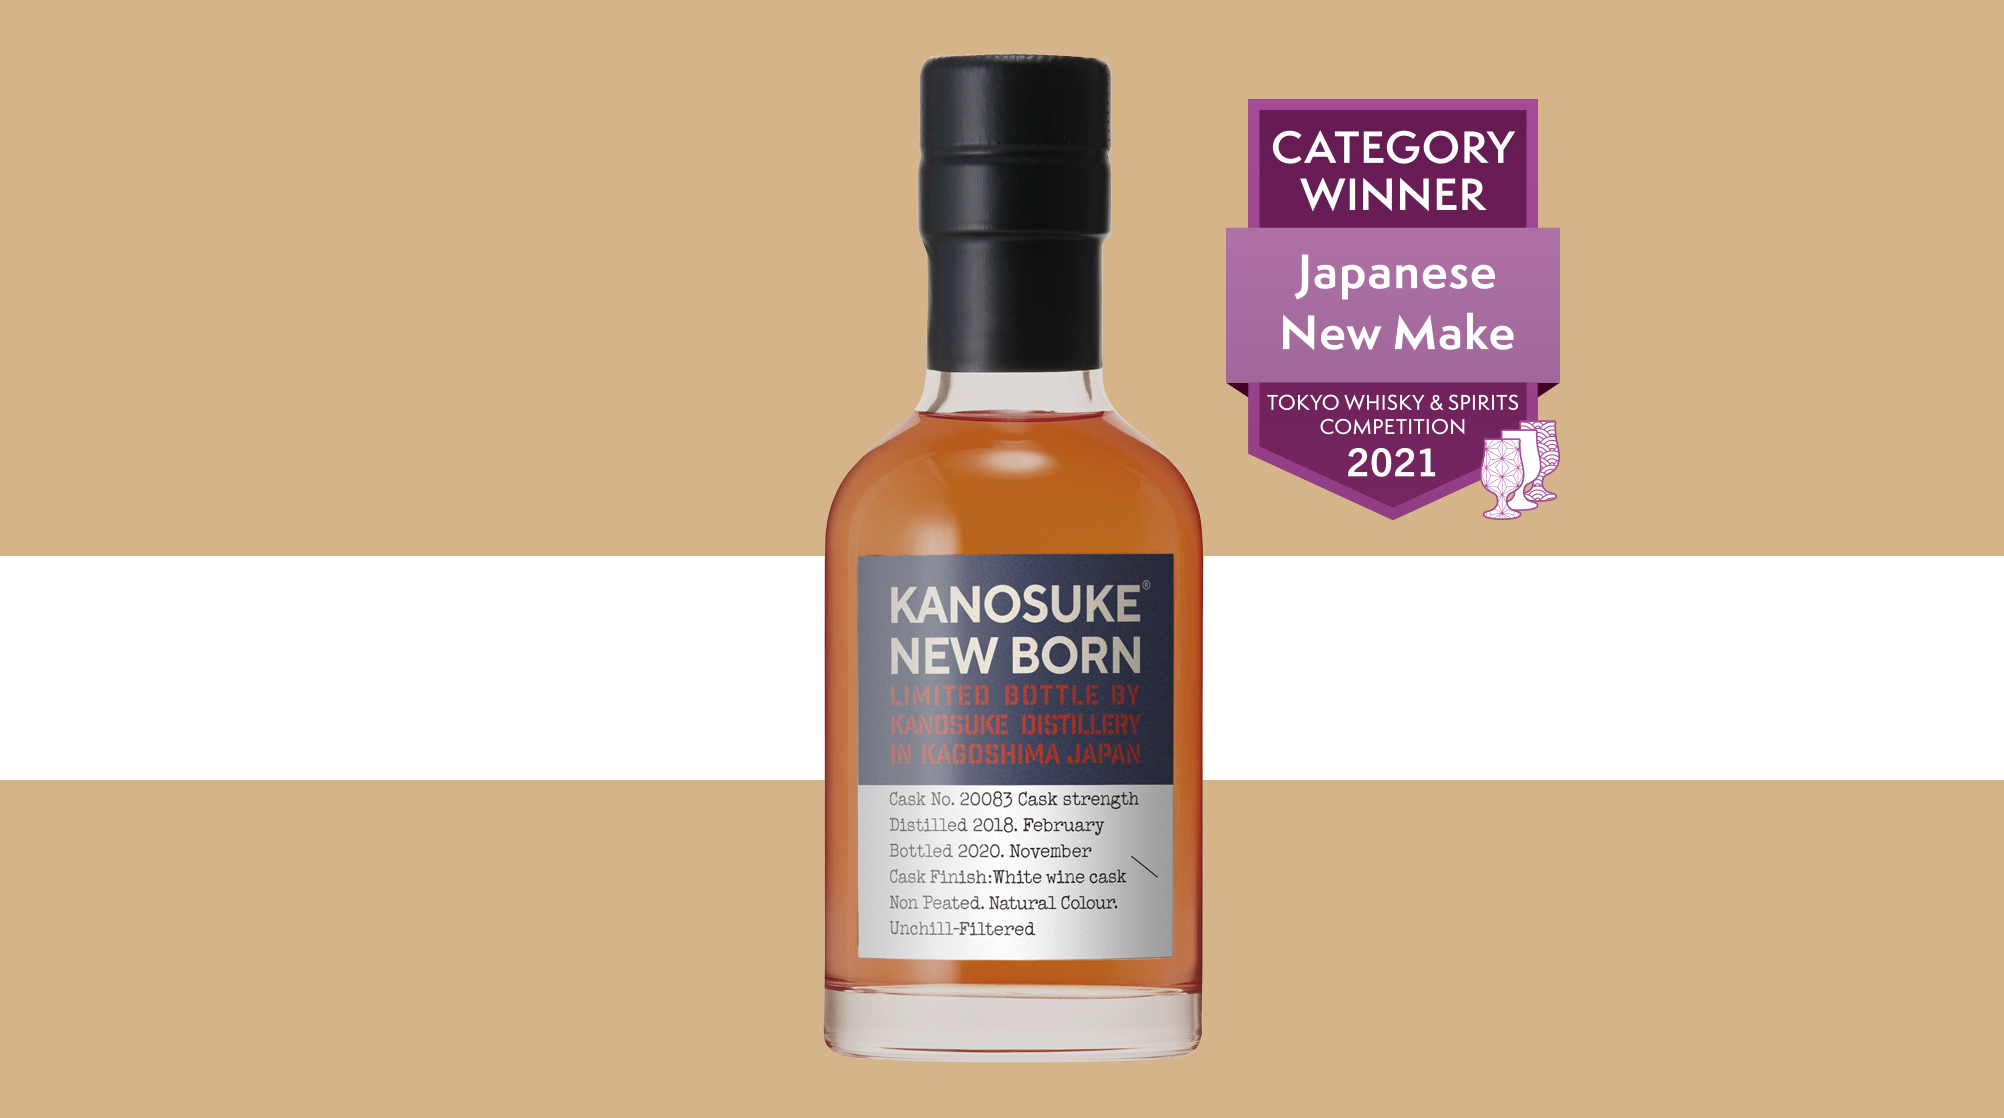 NEW BORN Kanosuke Distillery Limited Bottle